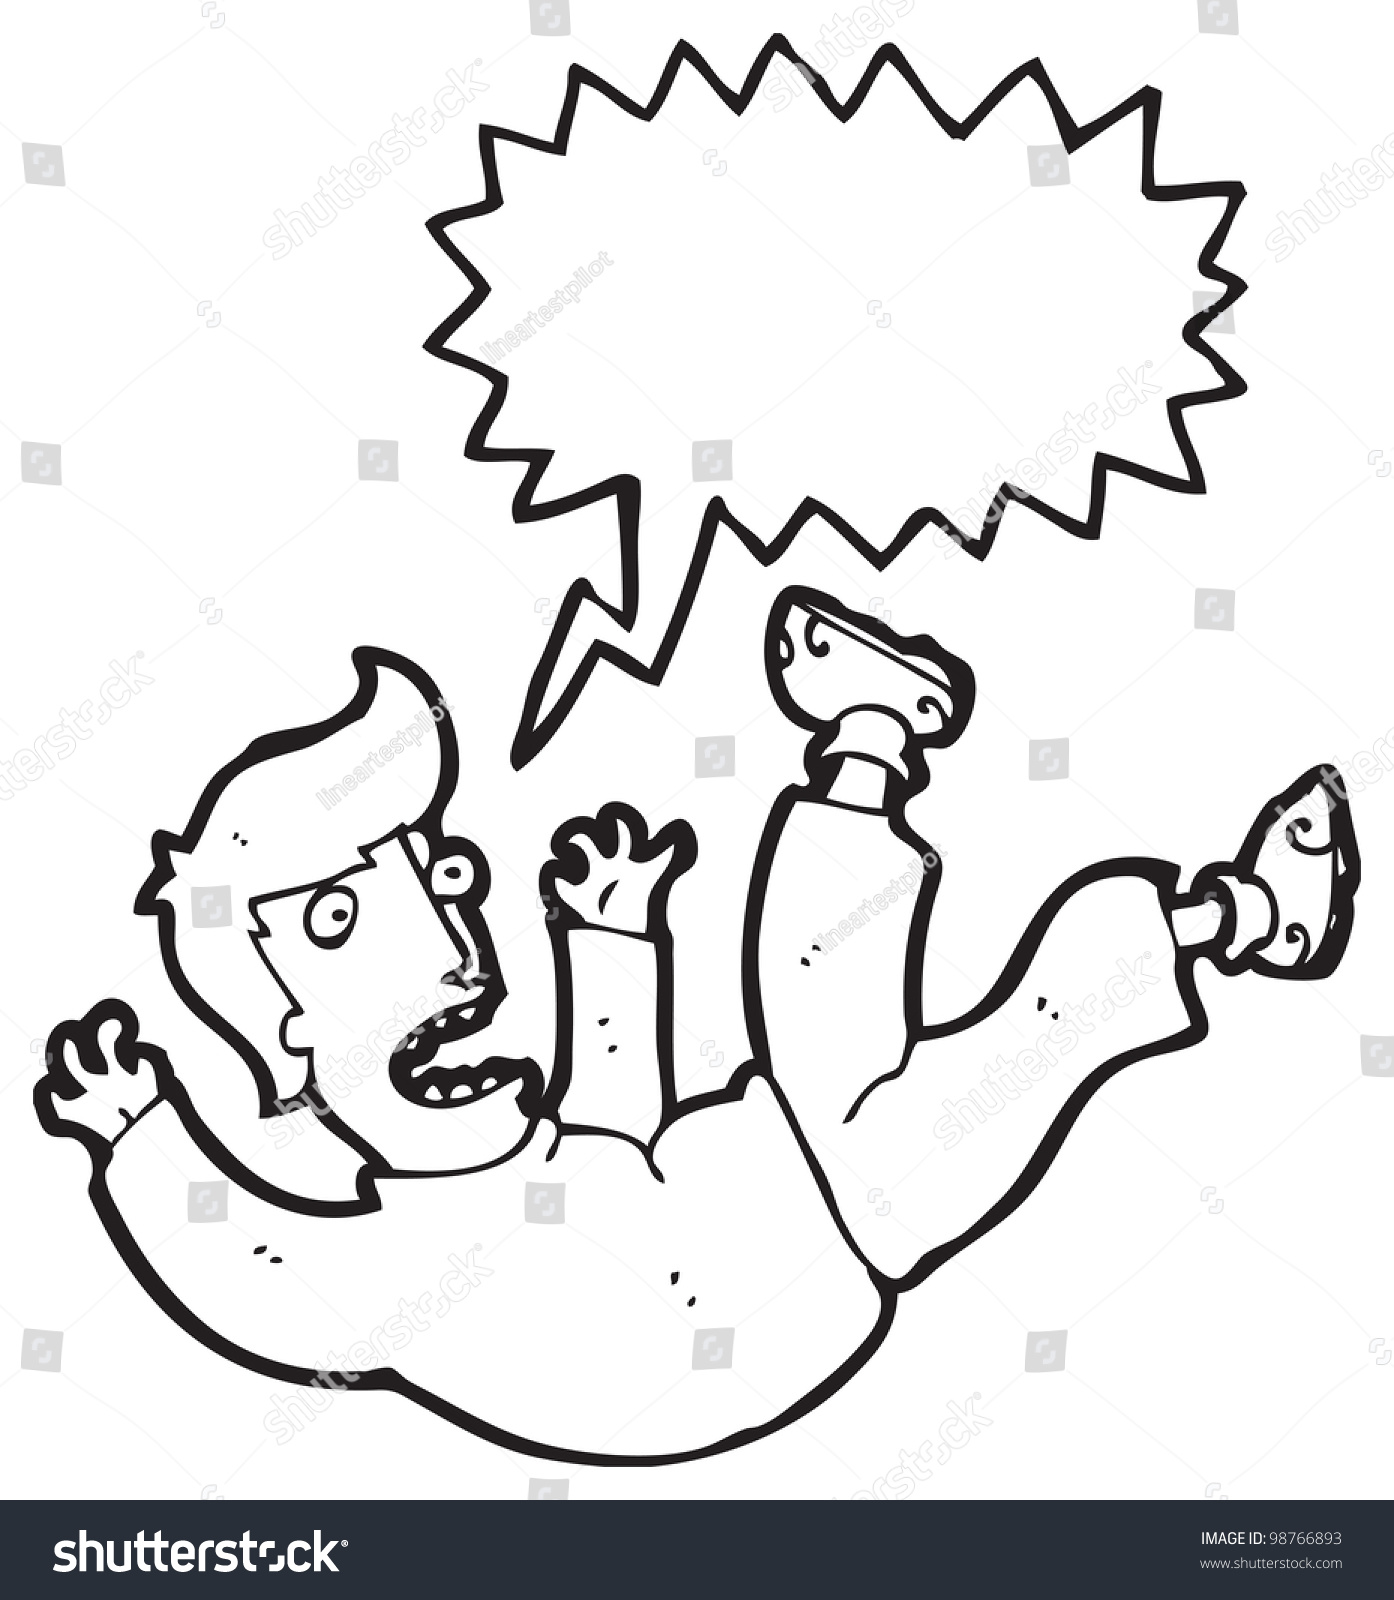 Falling Man Cartoon Stock Photo 98766893 : Shutterstock